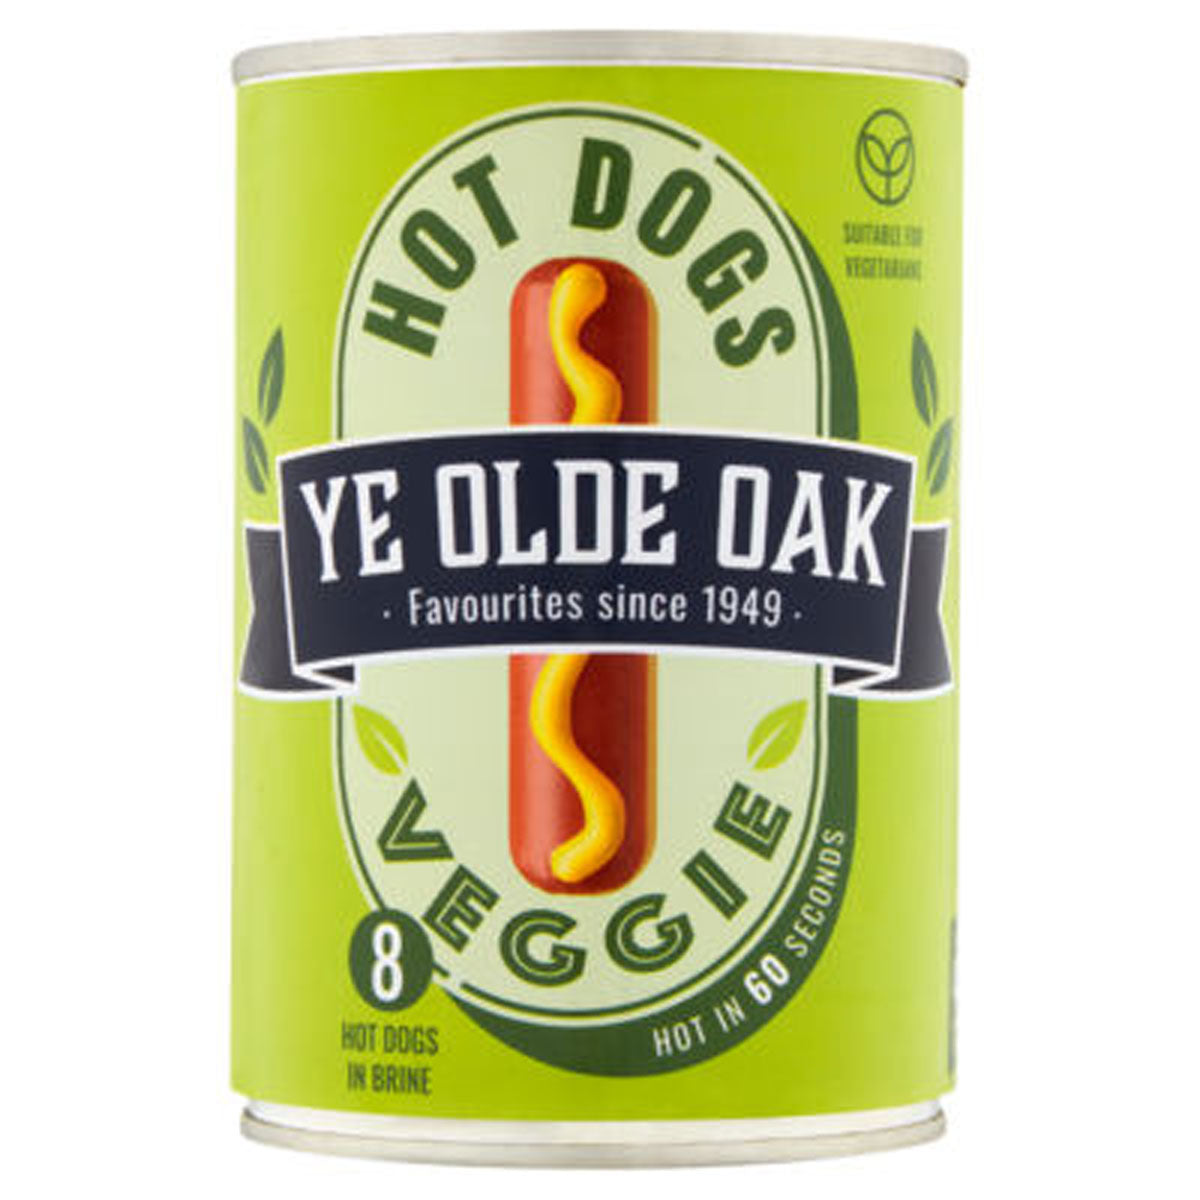 Ye Olde Oak - 8 Veggie Hot Dogs in Brine - 400g ye old oak veggie 8 oz can.